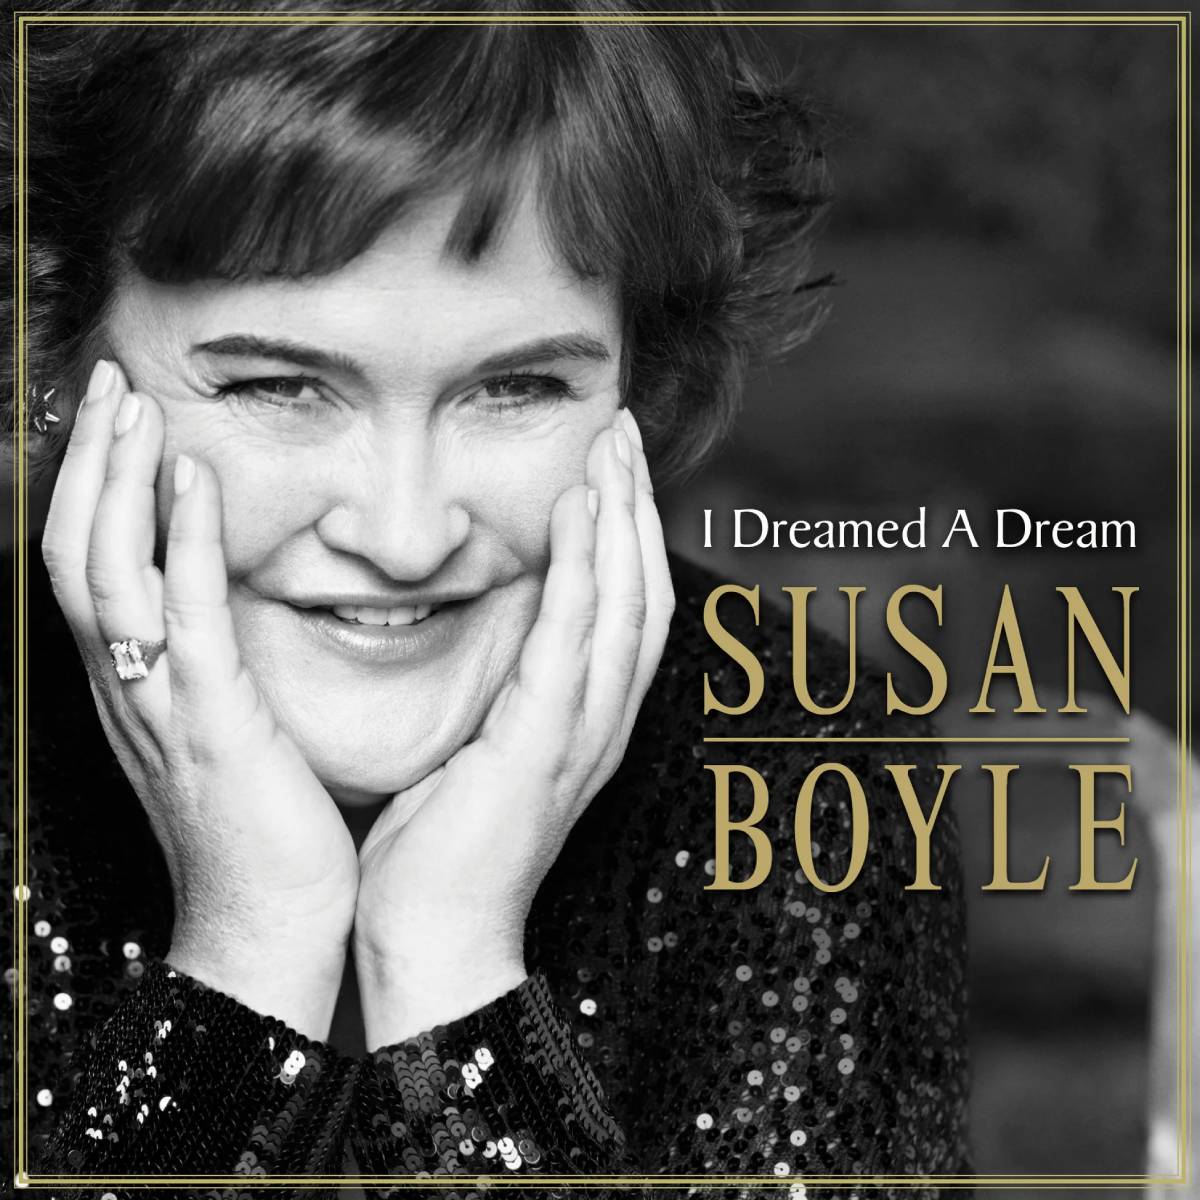 I Dreamed A Dream (Musikalbum von Susan Boyle)